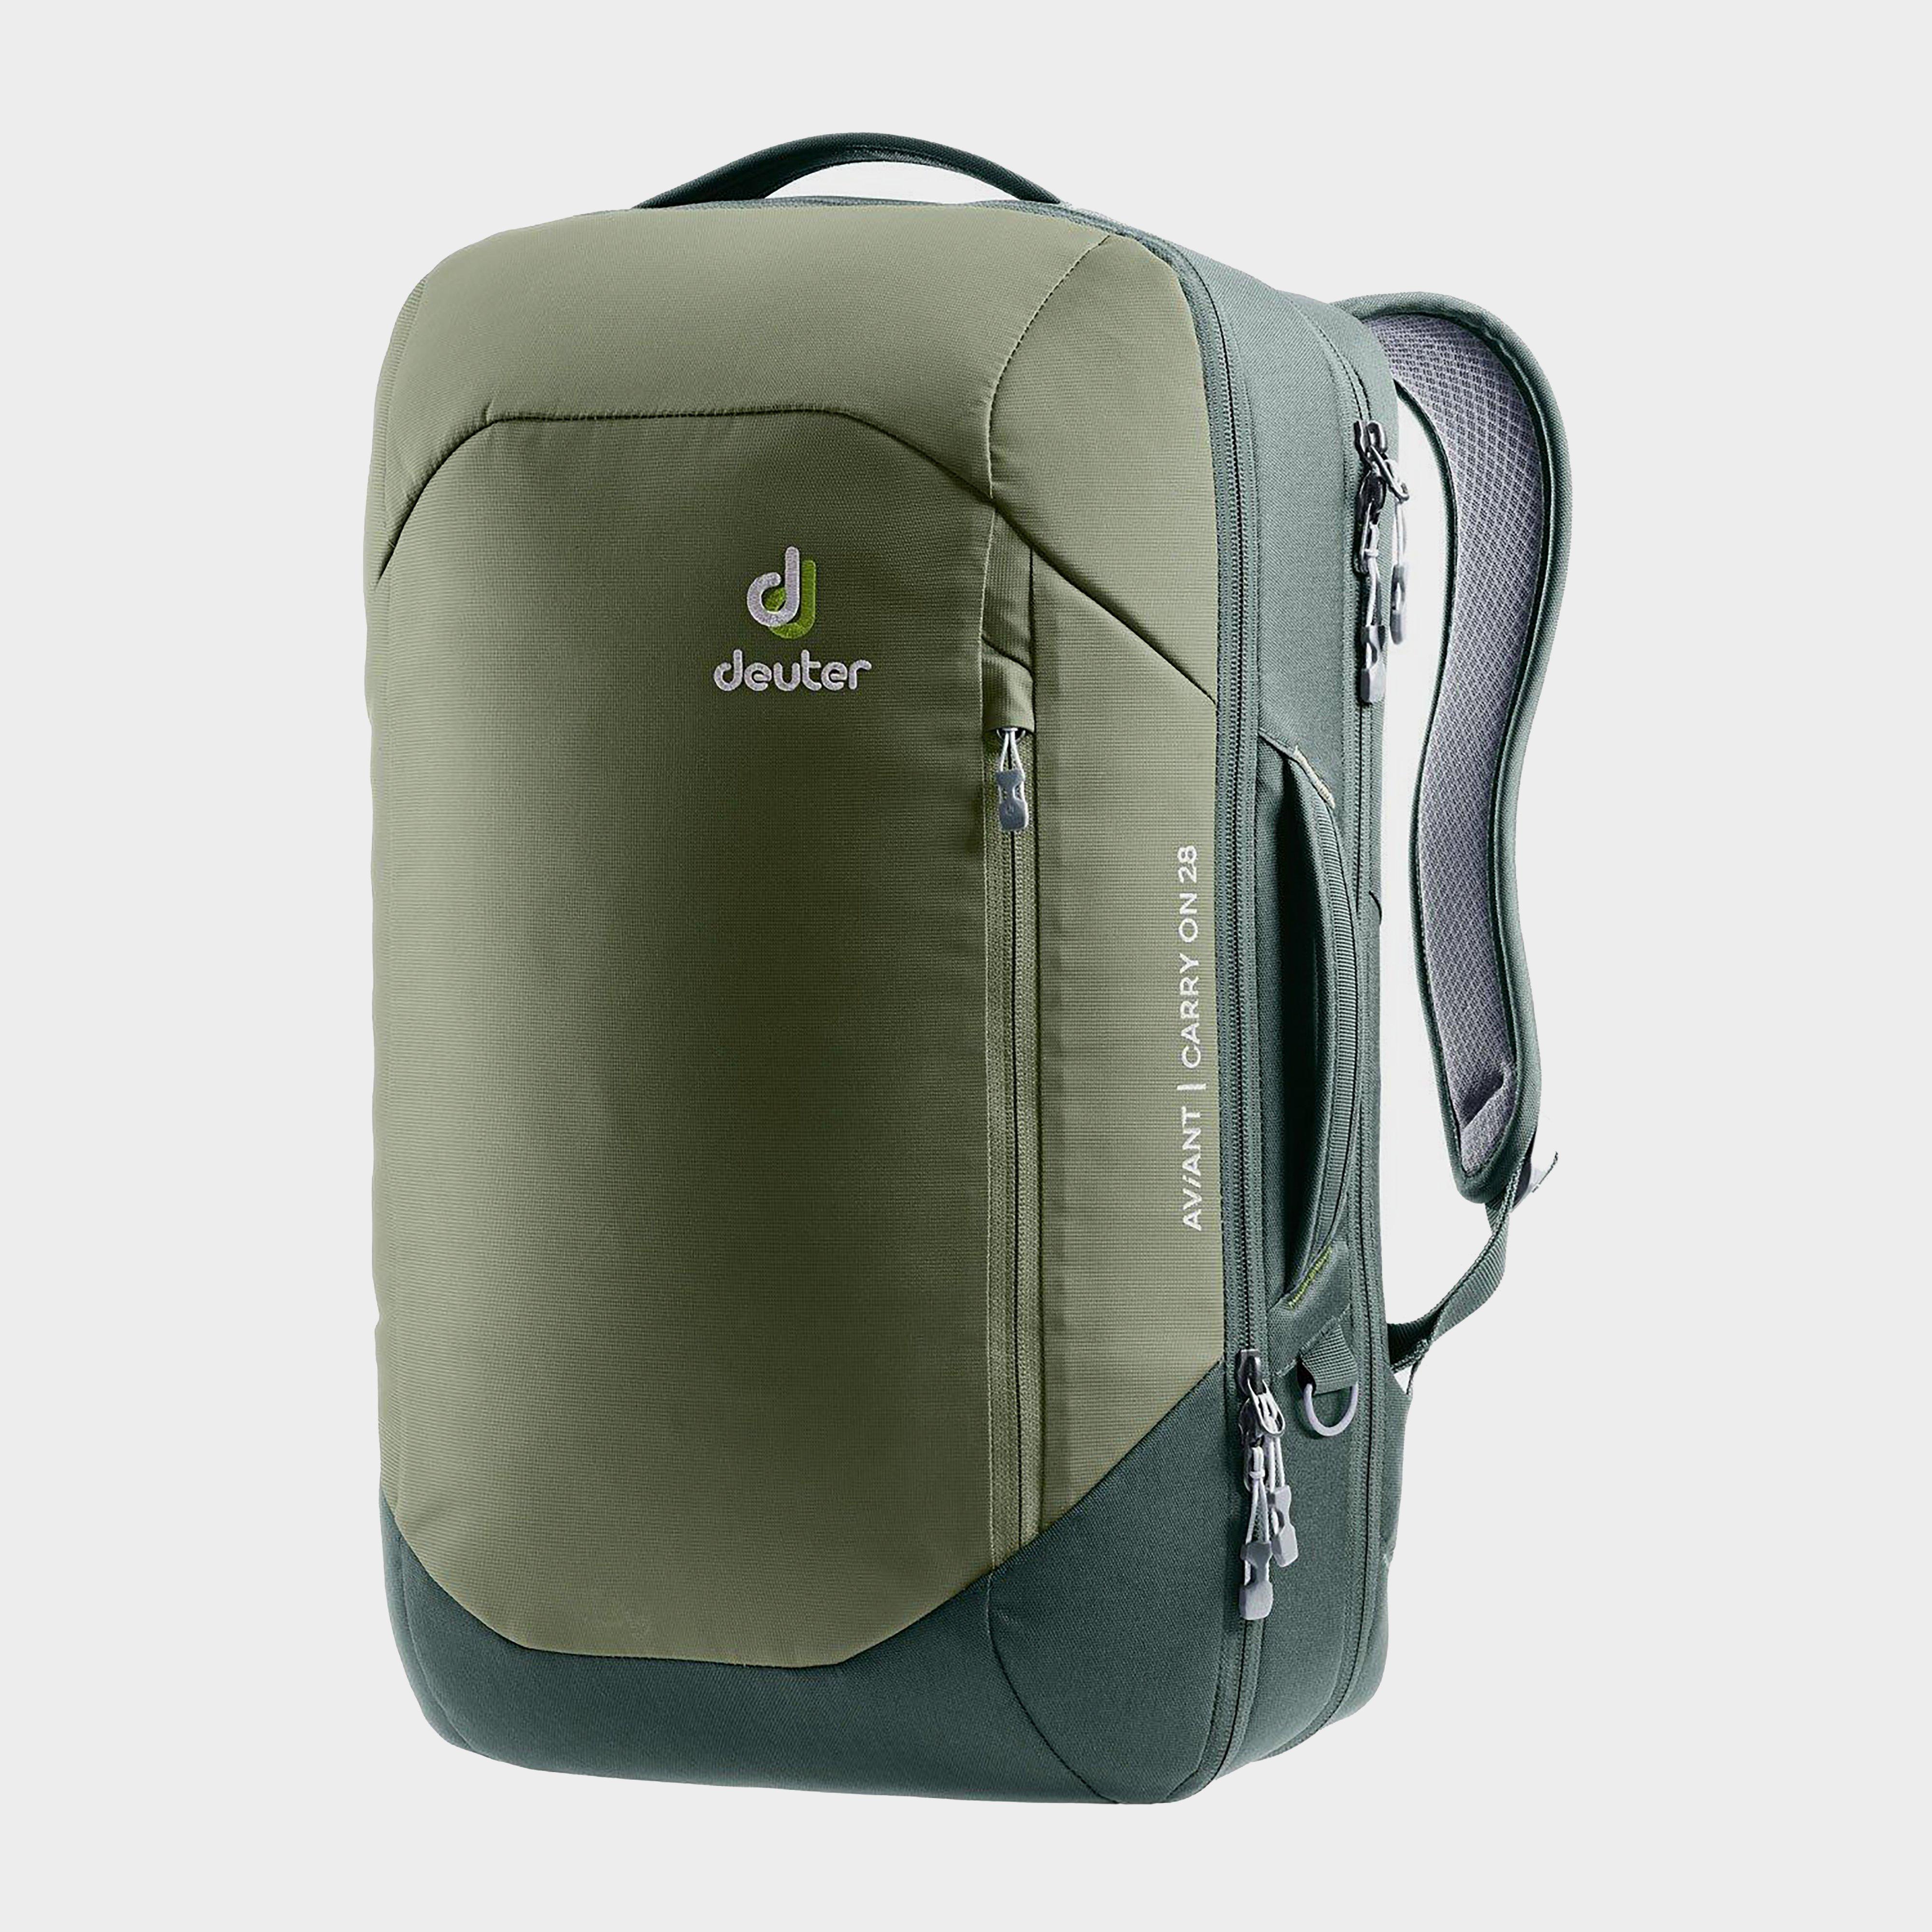 Deuter Aviant Carry On 28 Litre Backpack - Green/green  Green/green